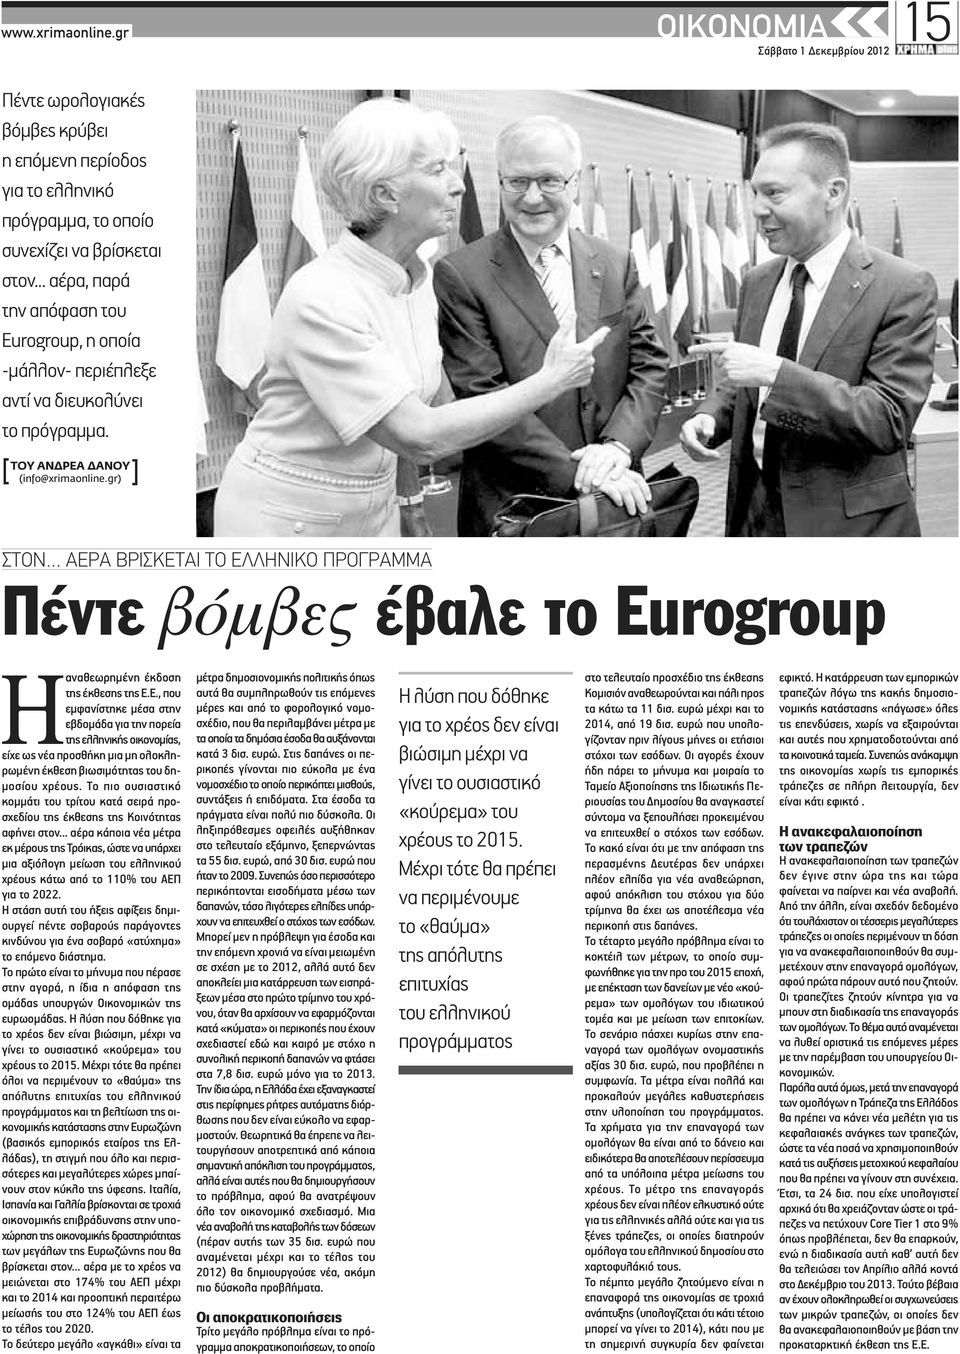 gr) ] ΣΤΟΝ ΑΕΡΑ ΒΡΙΣΚΕΤΑΙ ΤΟ ΕΛΛΗΝΙΚΟ ΠΡΟΓΡΑΜΜΑ Πέντε βόμβες έβαλε το Eurogroup Hαναθεωρημένη έκδοση της έκθεσης της Ε.Ε., που εμφανίστηκε μέσα στην εβδομάδα για την πορεία της ελληνικής οικονομίας, είχε ως νέα προσθήκη μια μη ολοκληρωμένη έκθεση βιωσιμότητας του δημοσίου χρέους.